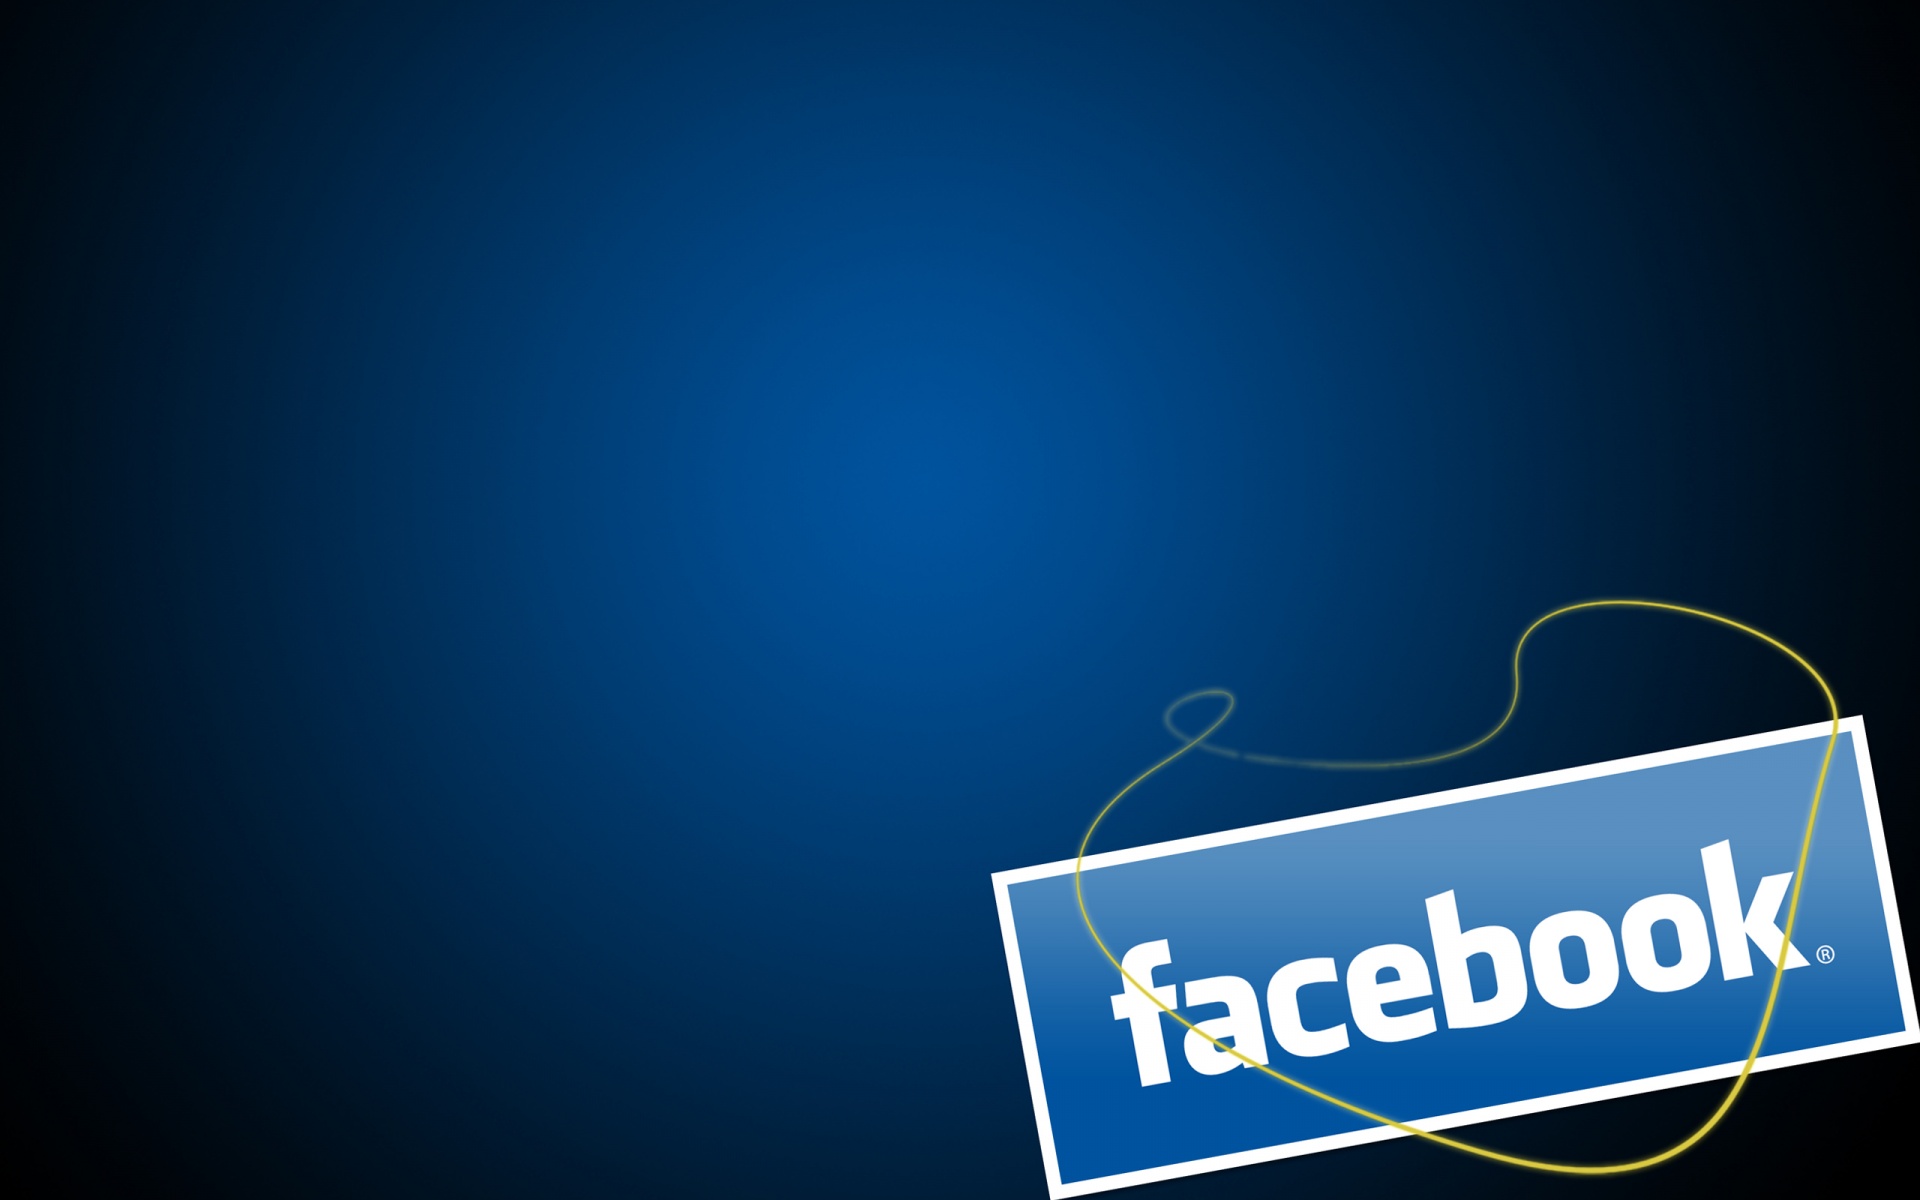 facebook wallpaper hd,blue,text,font,logo,graphic design